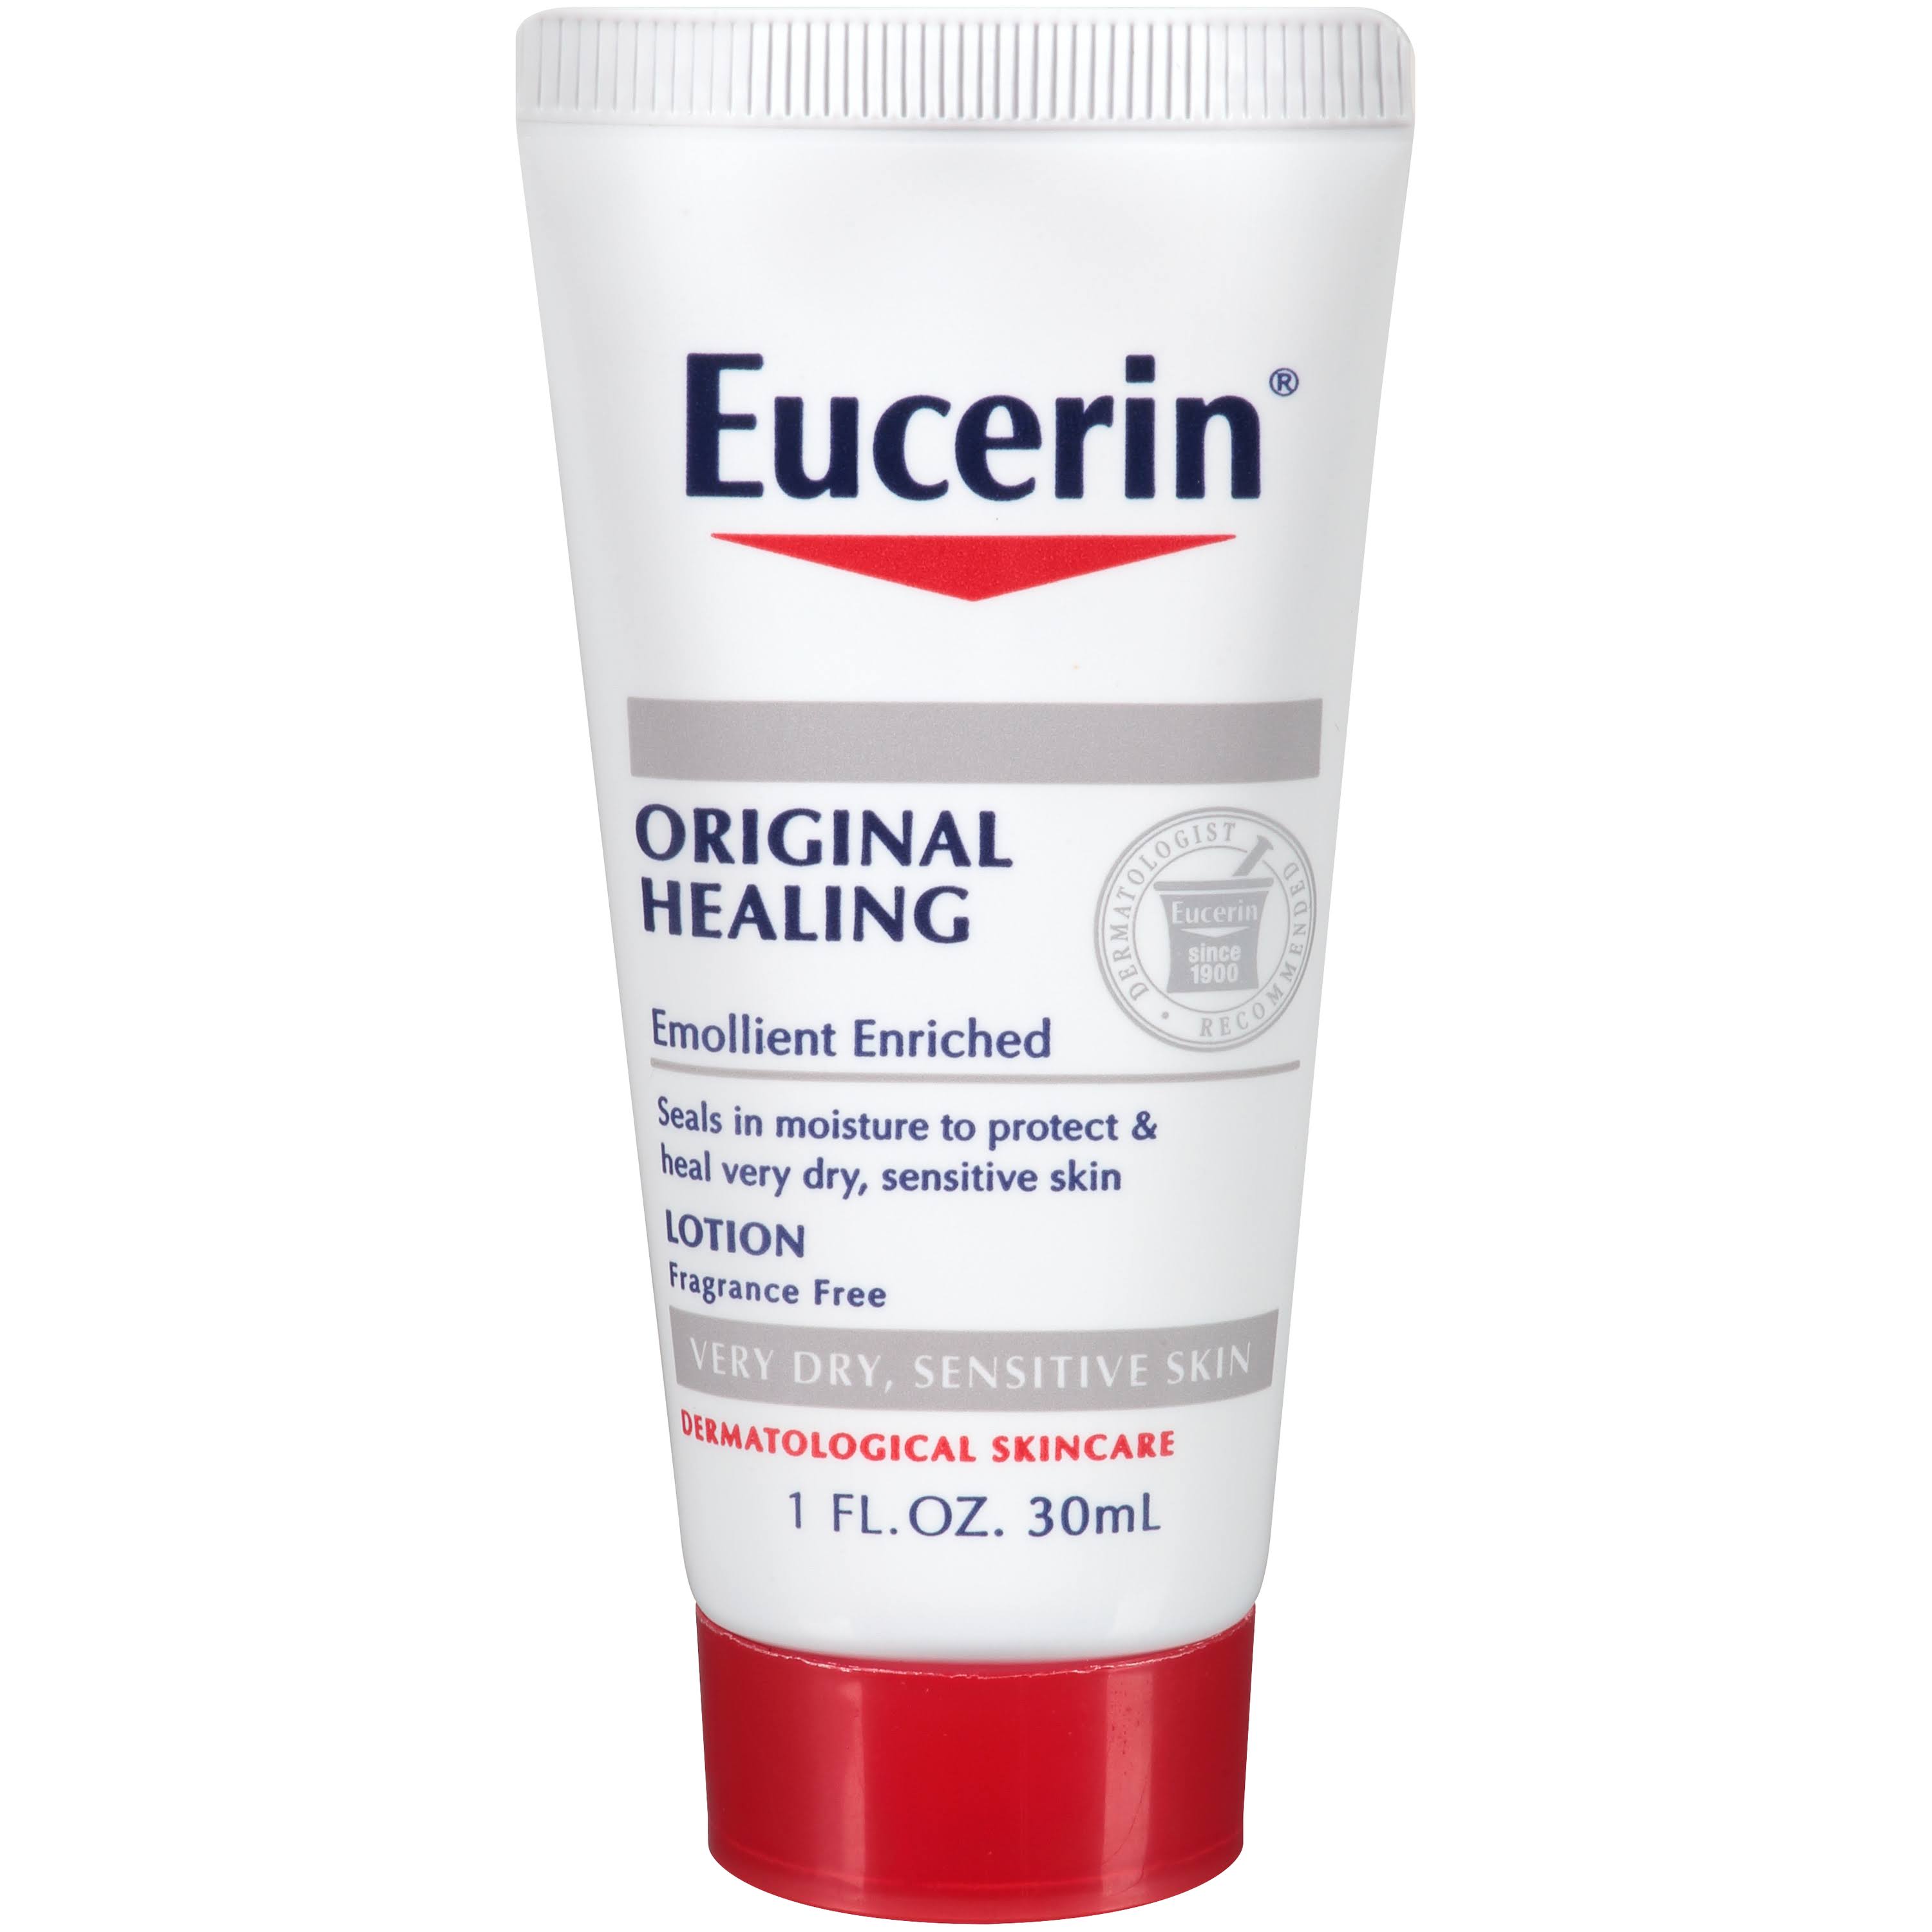 Eucerin, Original Healing Lotion, Fragrance Free, 1 Fl oz (30 ml)